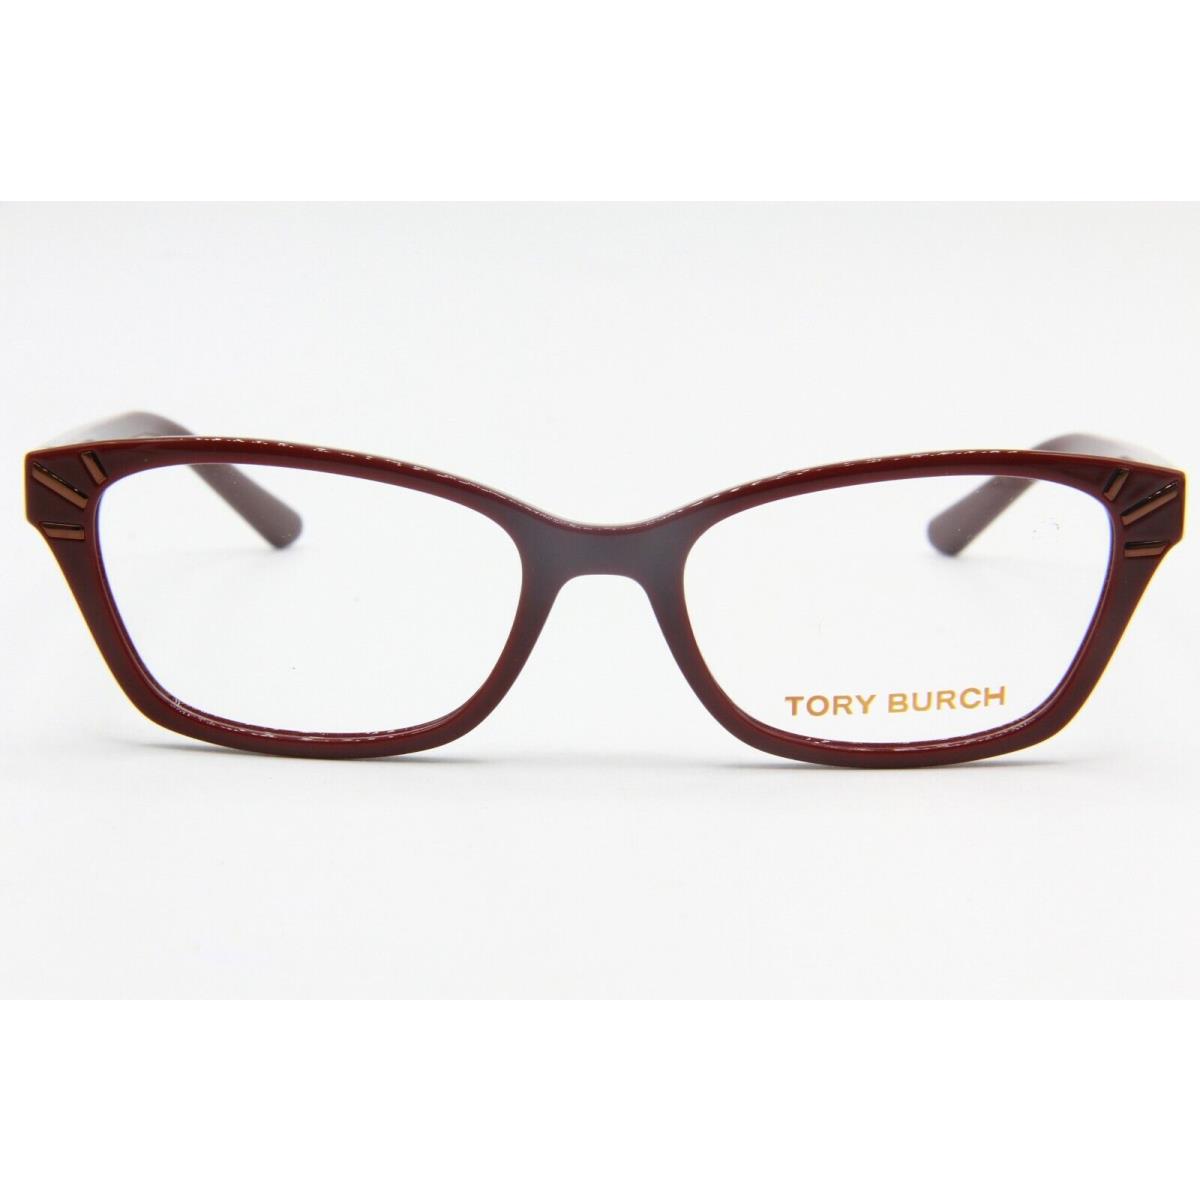 Tory Burch eyeglasses  - Frame: Red 0